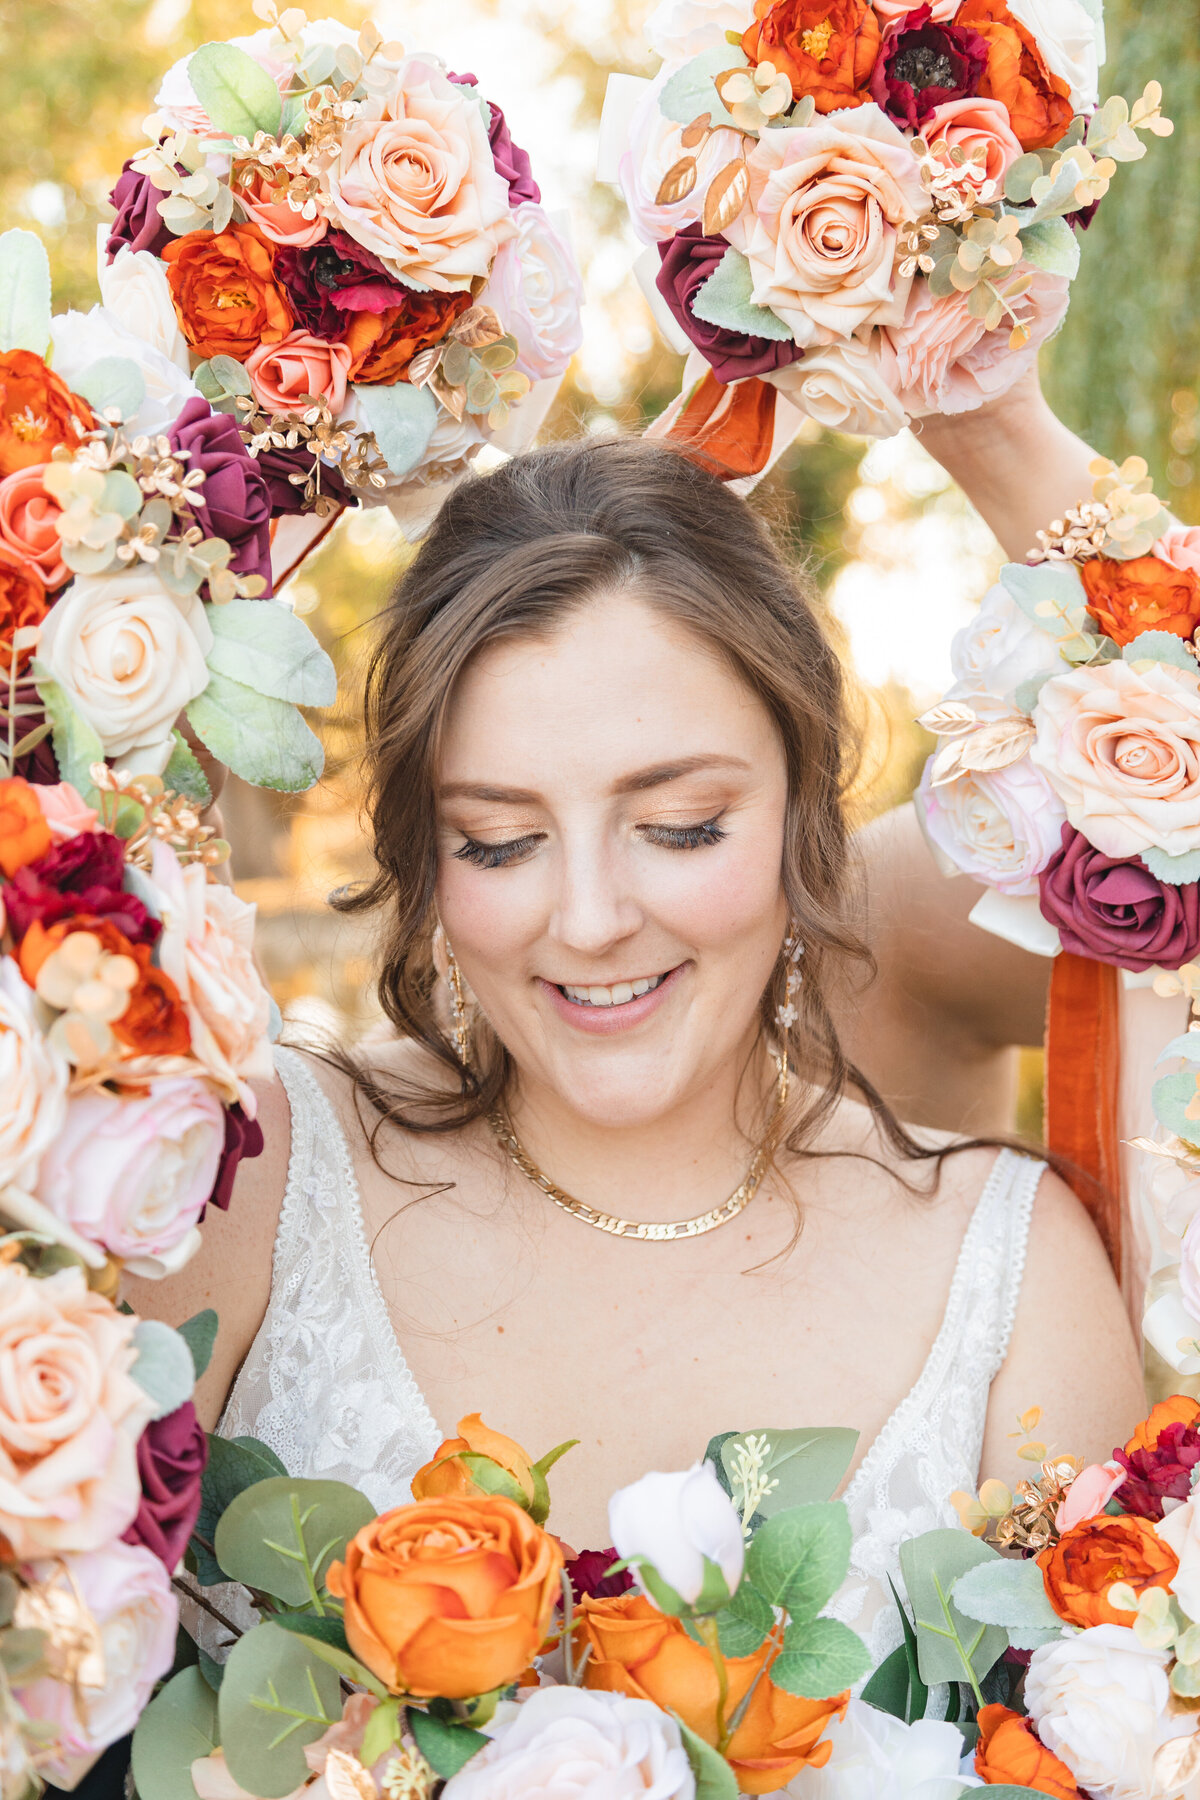 halo-of-flowers-around-bride